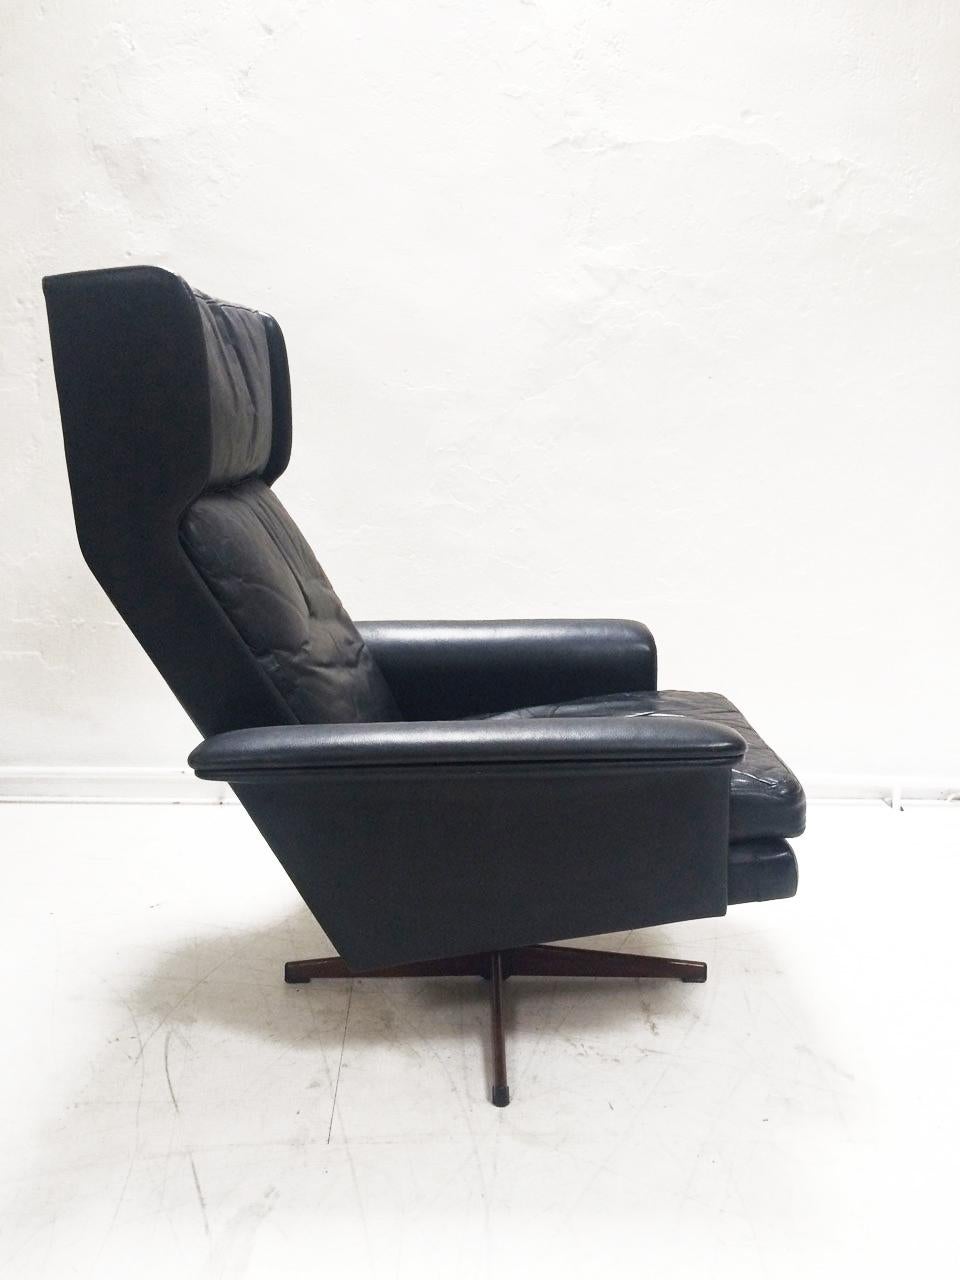 Midcentury Danish Leather 3-piece Lounge Suite by Komfort designed HW Klein 60s 1